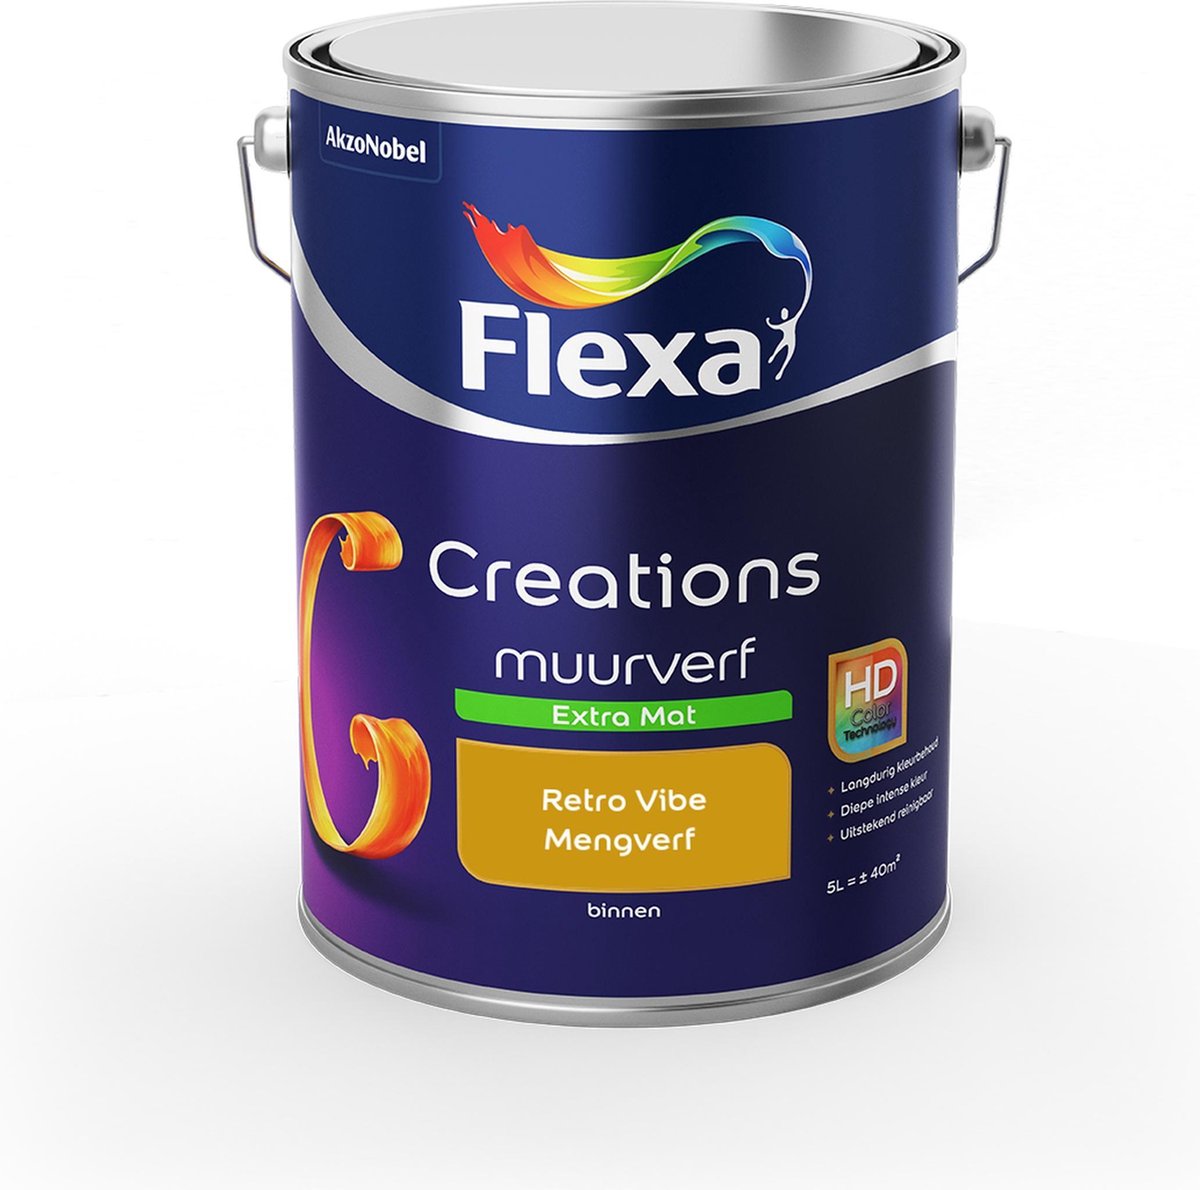 Flexa Creations Muurverf Extra Mat - Retro Vibe - Mengkleuren Collectie - 5 Liter